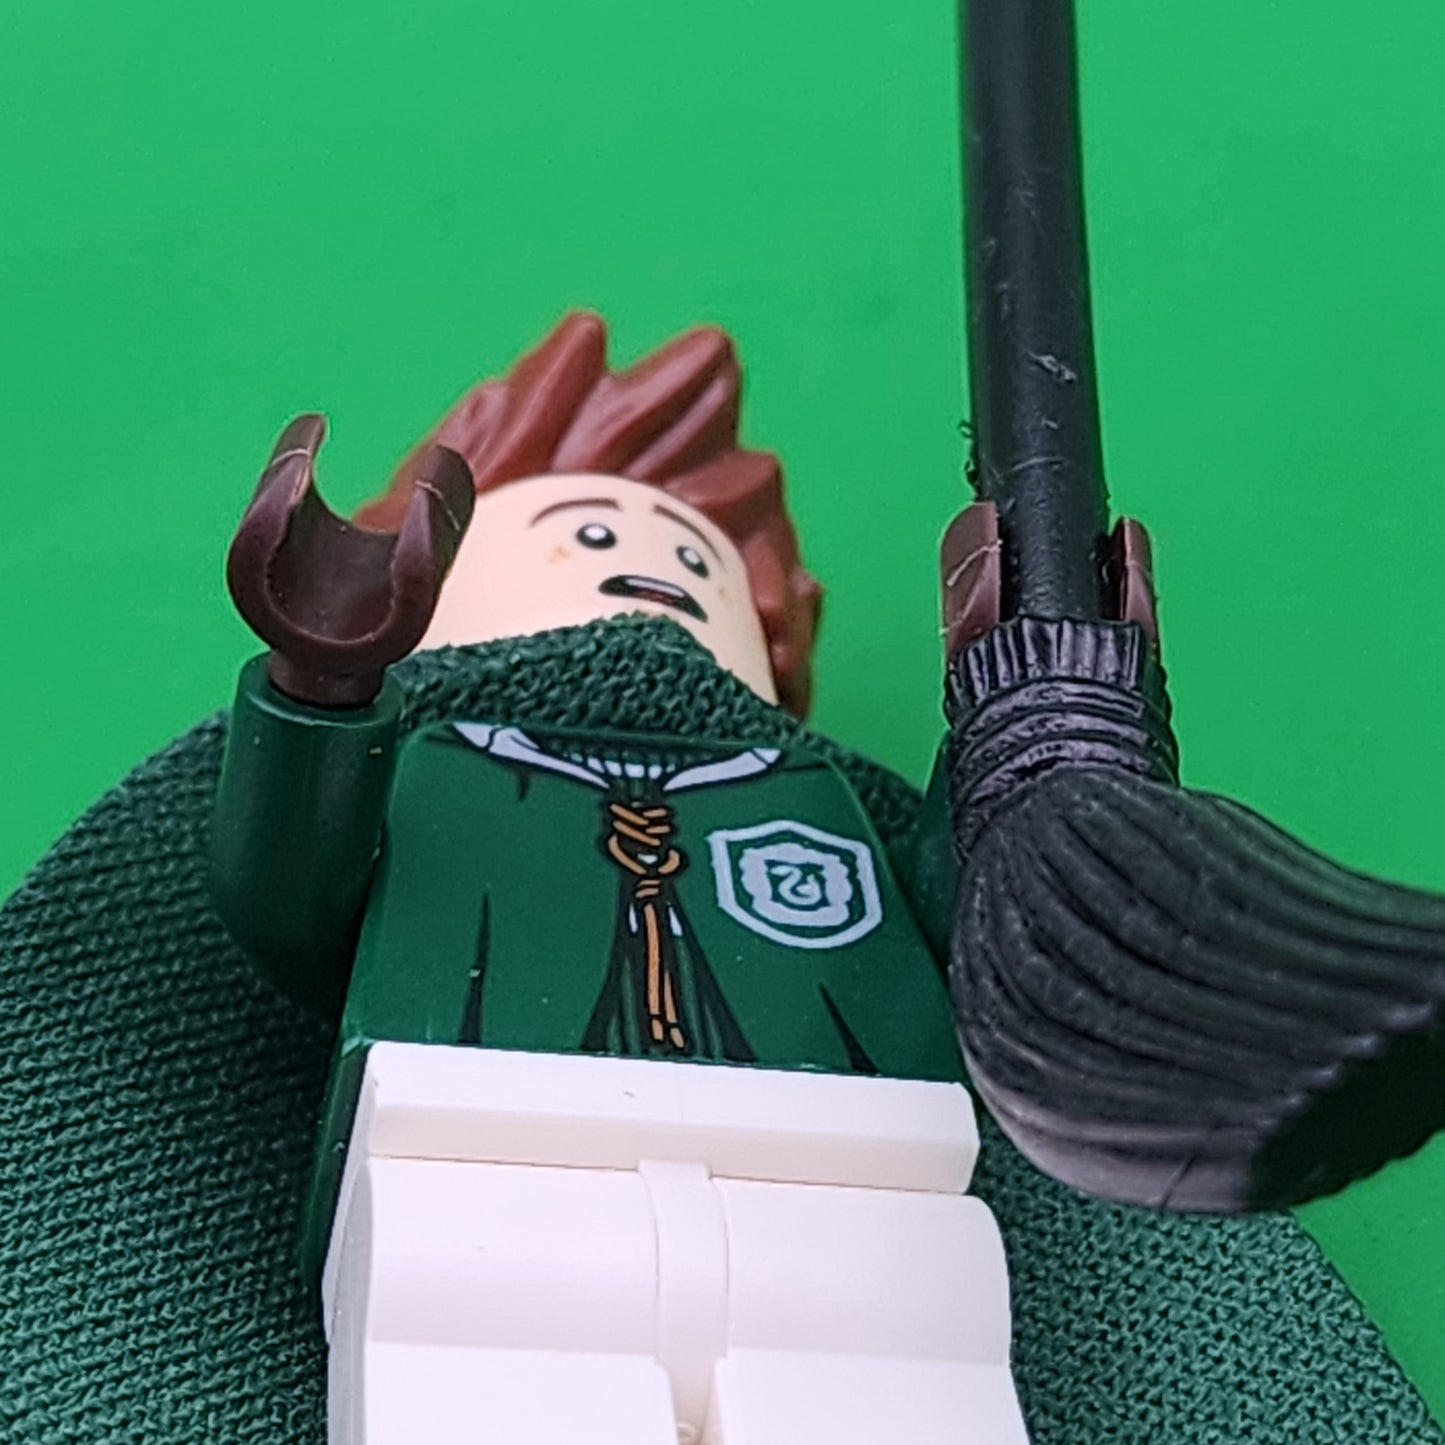 Lego Lucian Bole Minifigure Quidditch Uniform hp135 Harry Potter